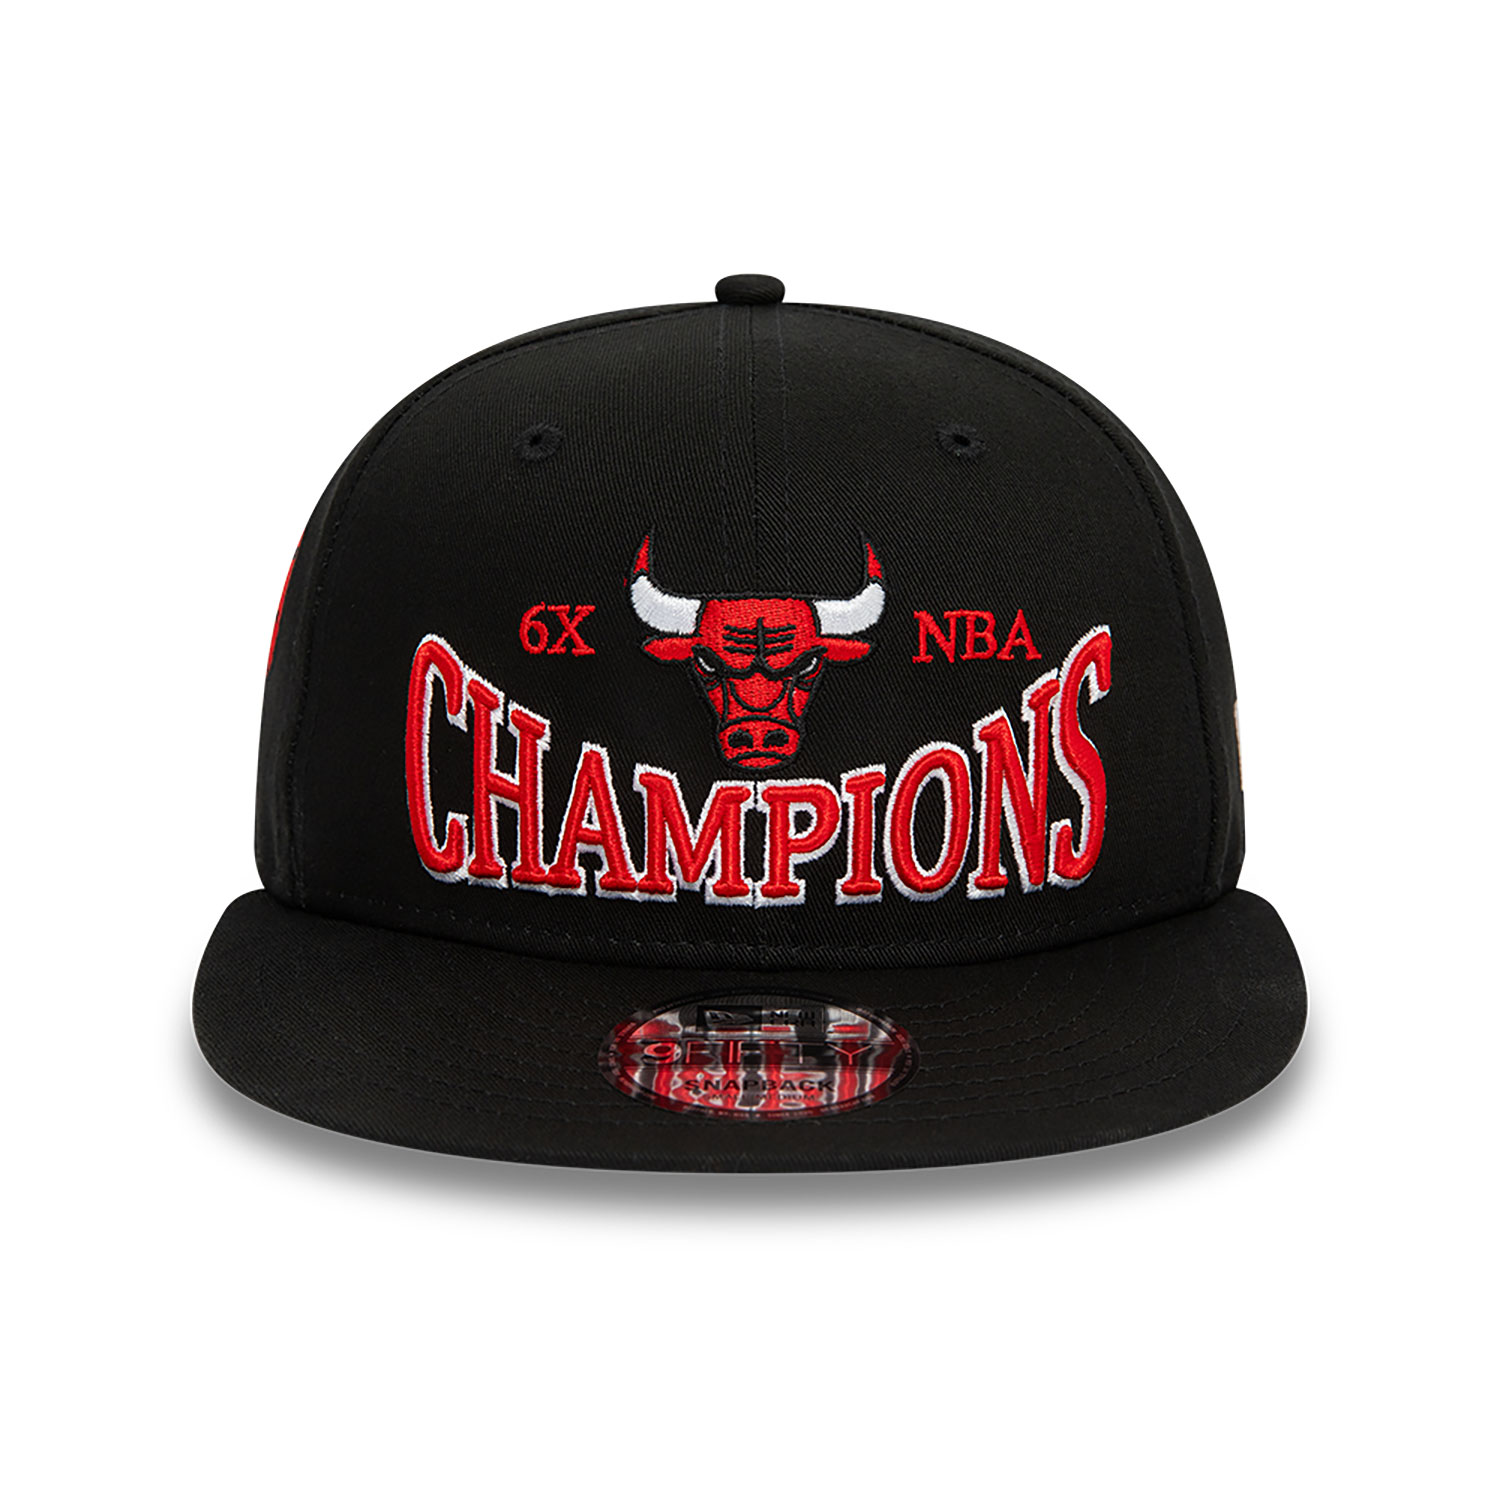 New Era - Chicago Bulls Champions Patch 9FIFTY Snapback Cap - Black